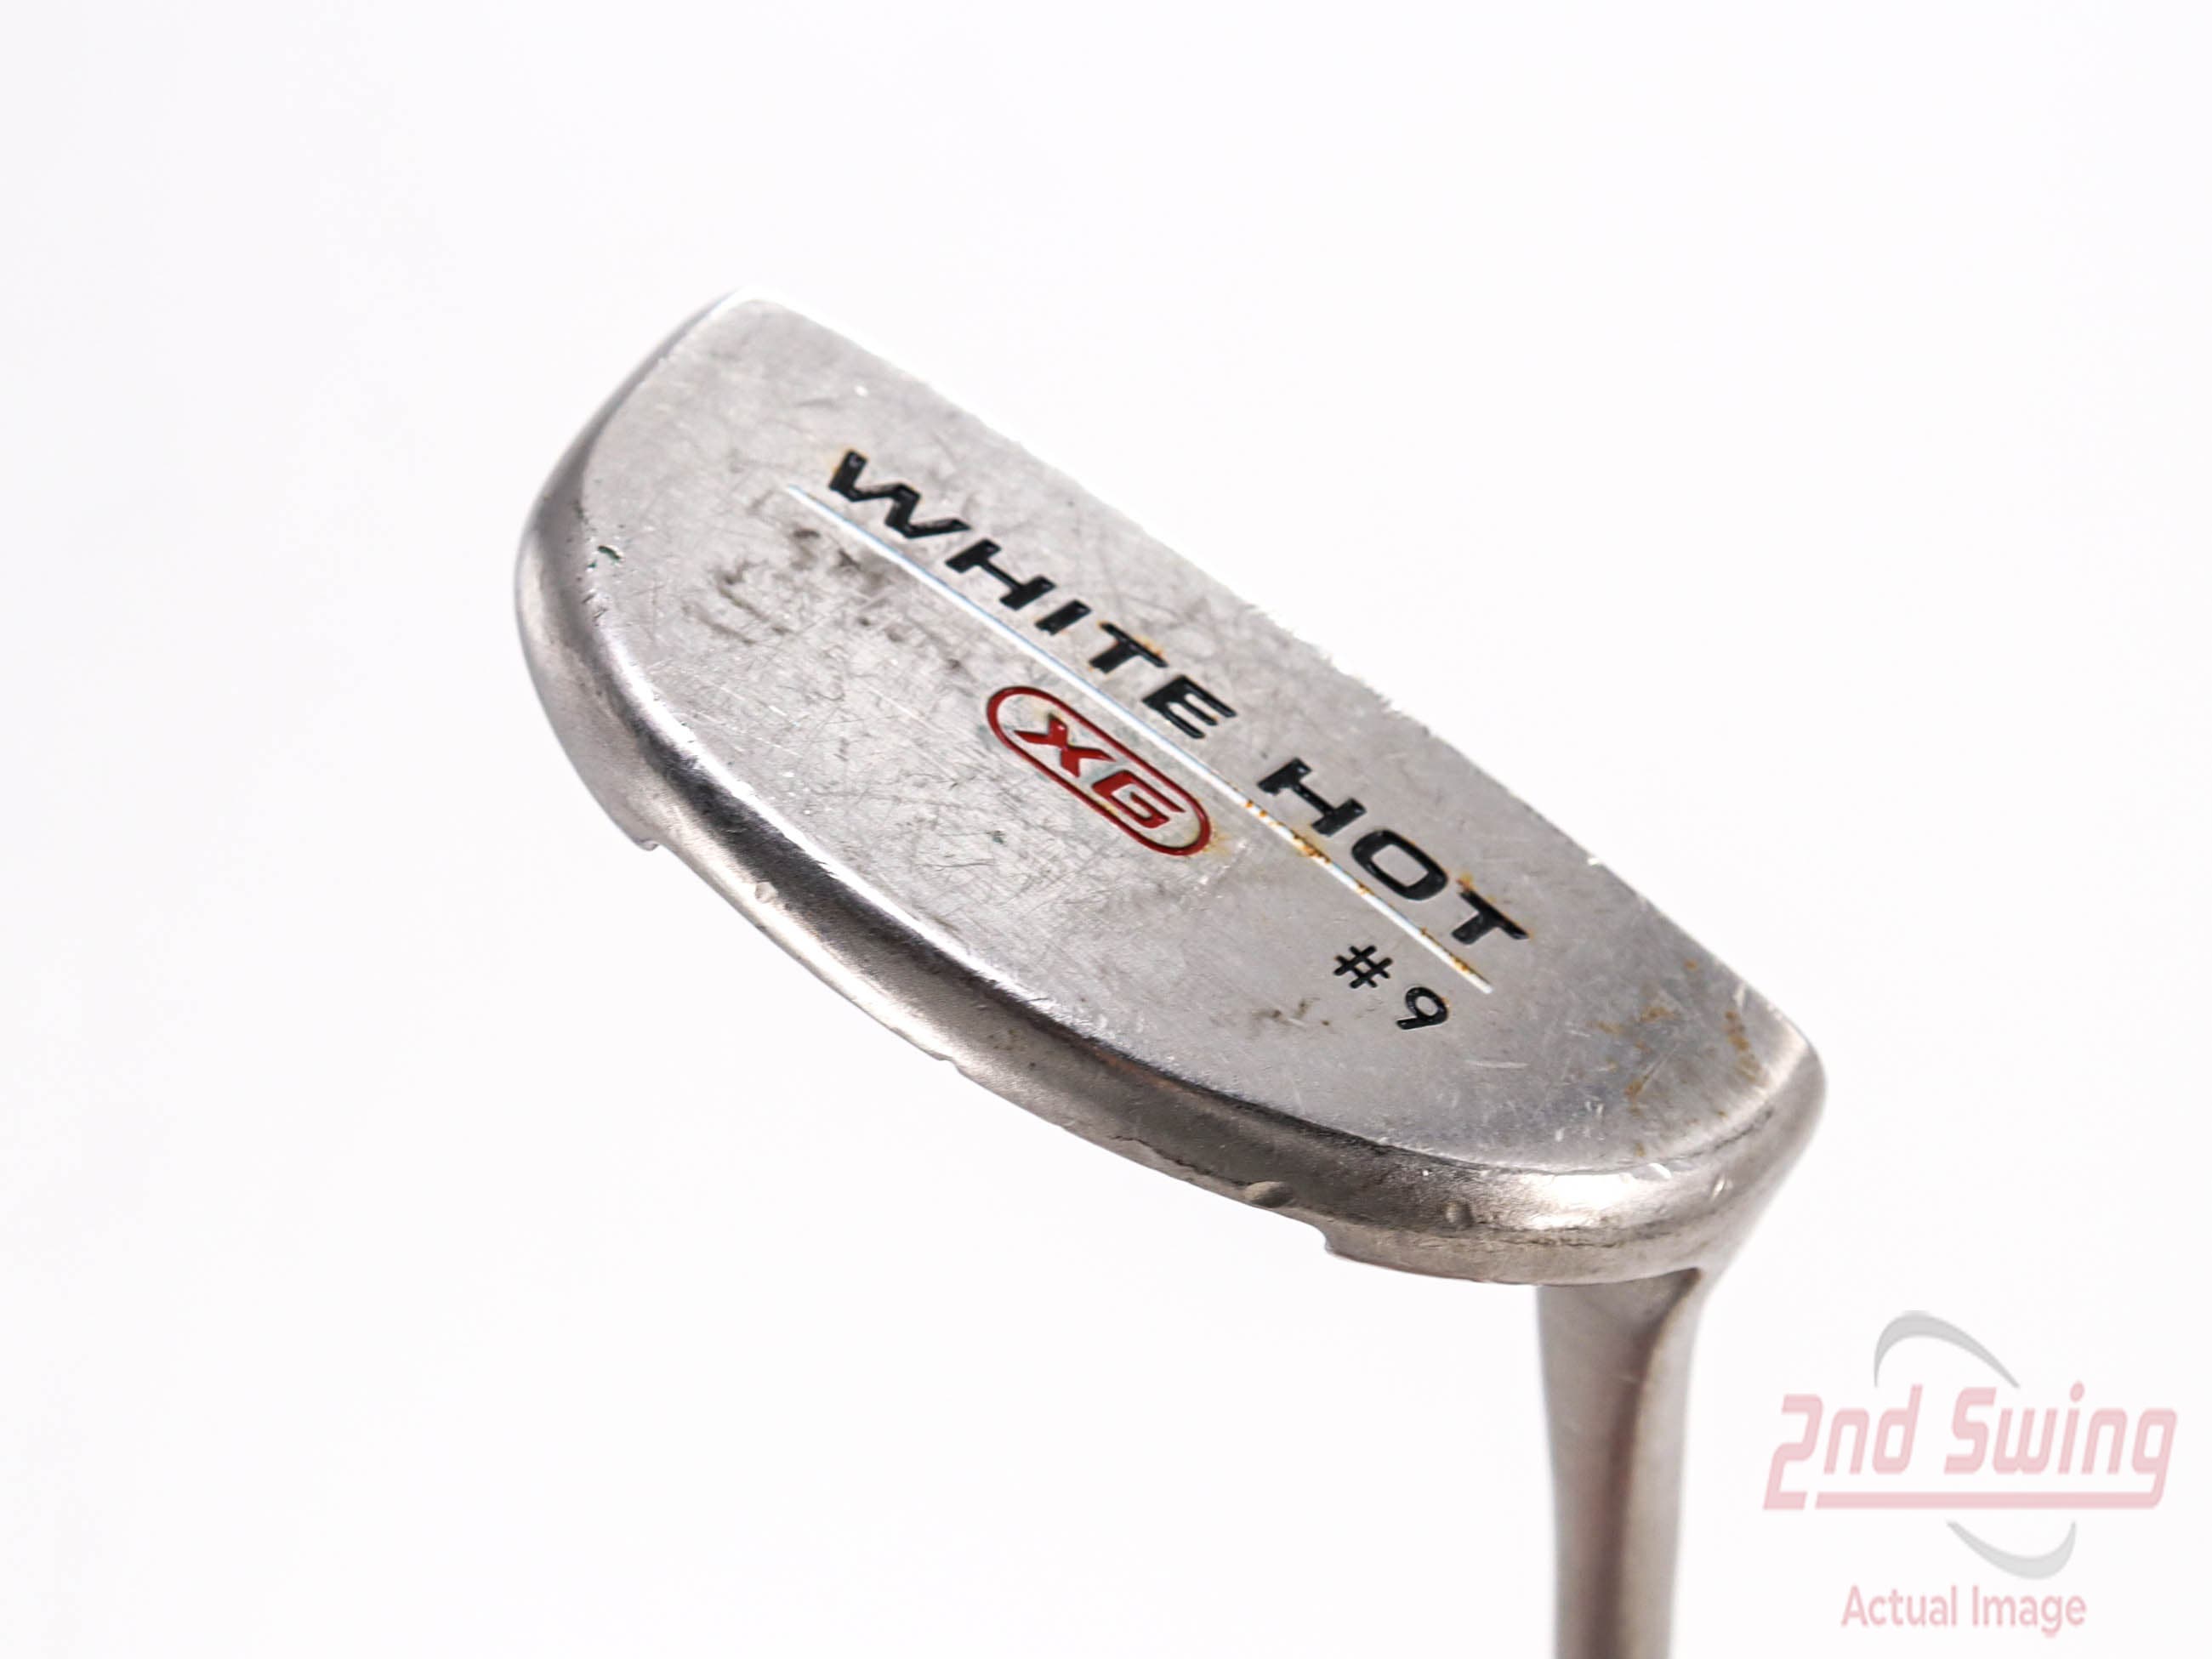 Odyssey White Hot XG 9 Putter | 2nd Swing Golf